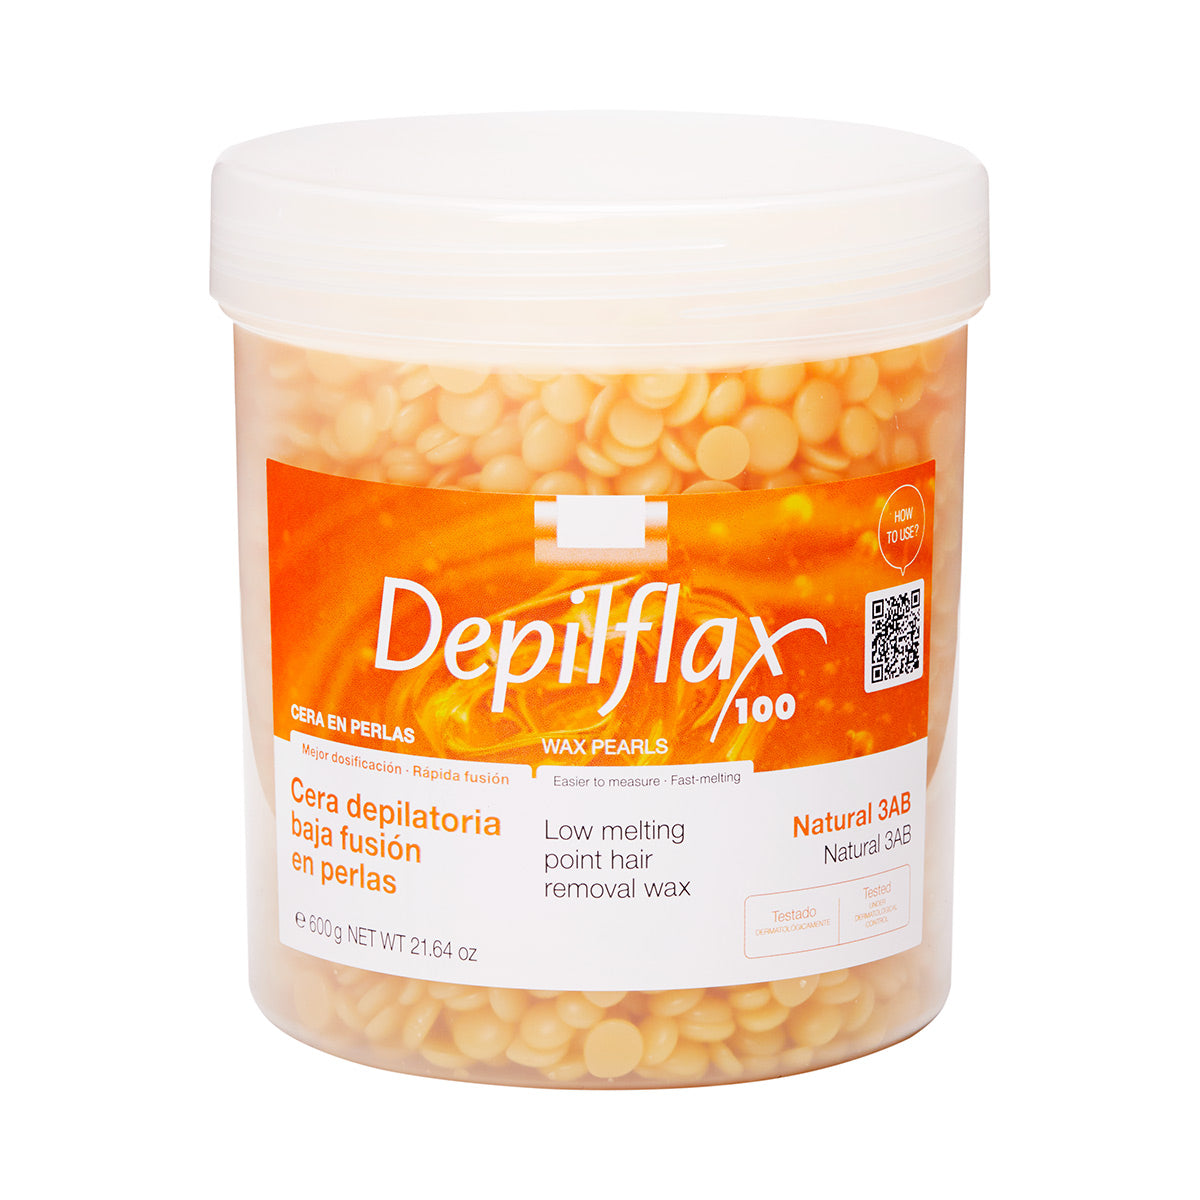 Depilflax 100 hard wax stripless depilatory pearl 600g natural